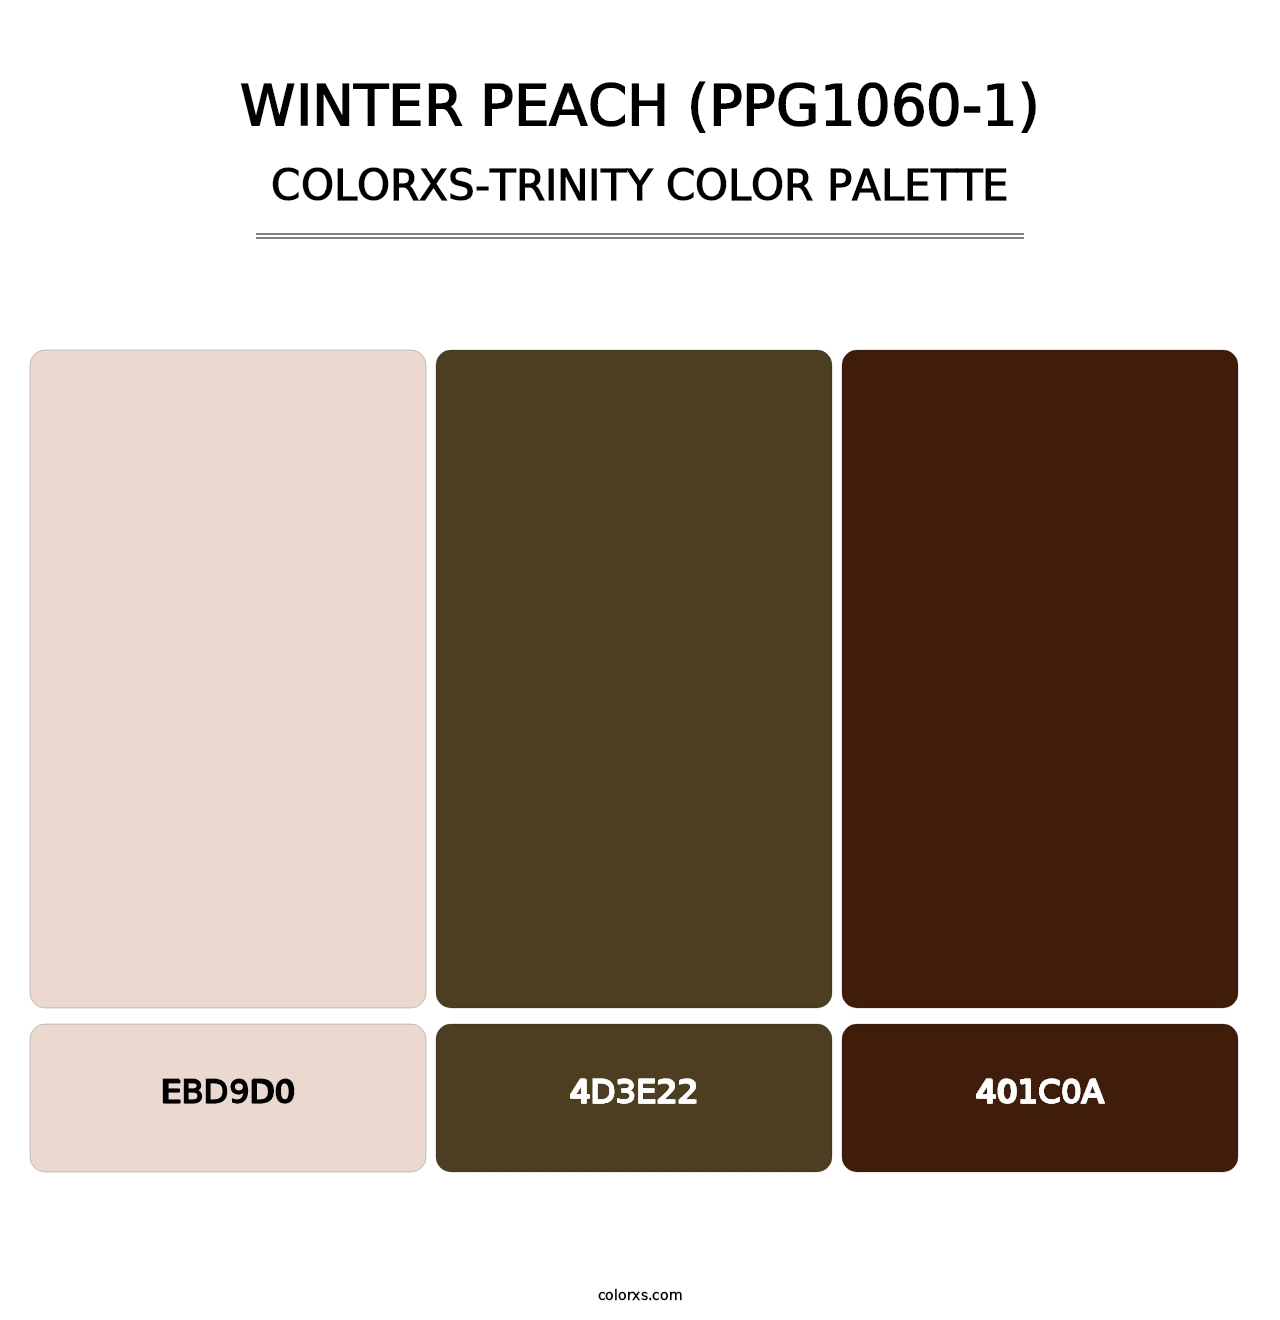 Winter Peach (PPG1060-1) - Colorxs Trinity Palette